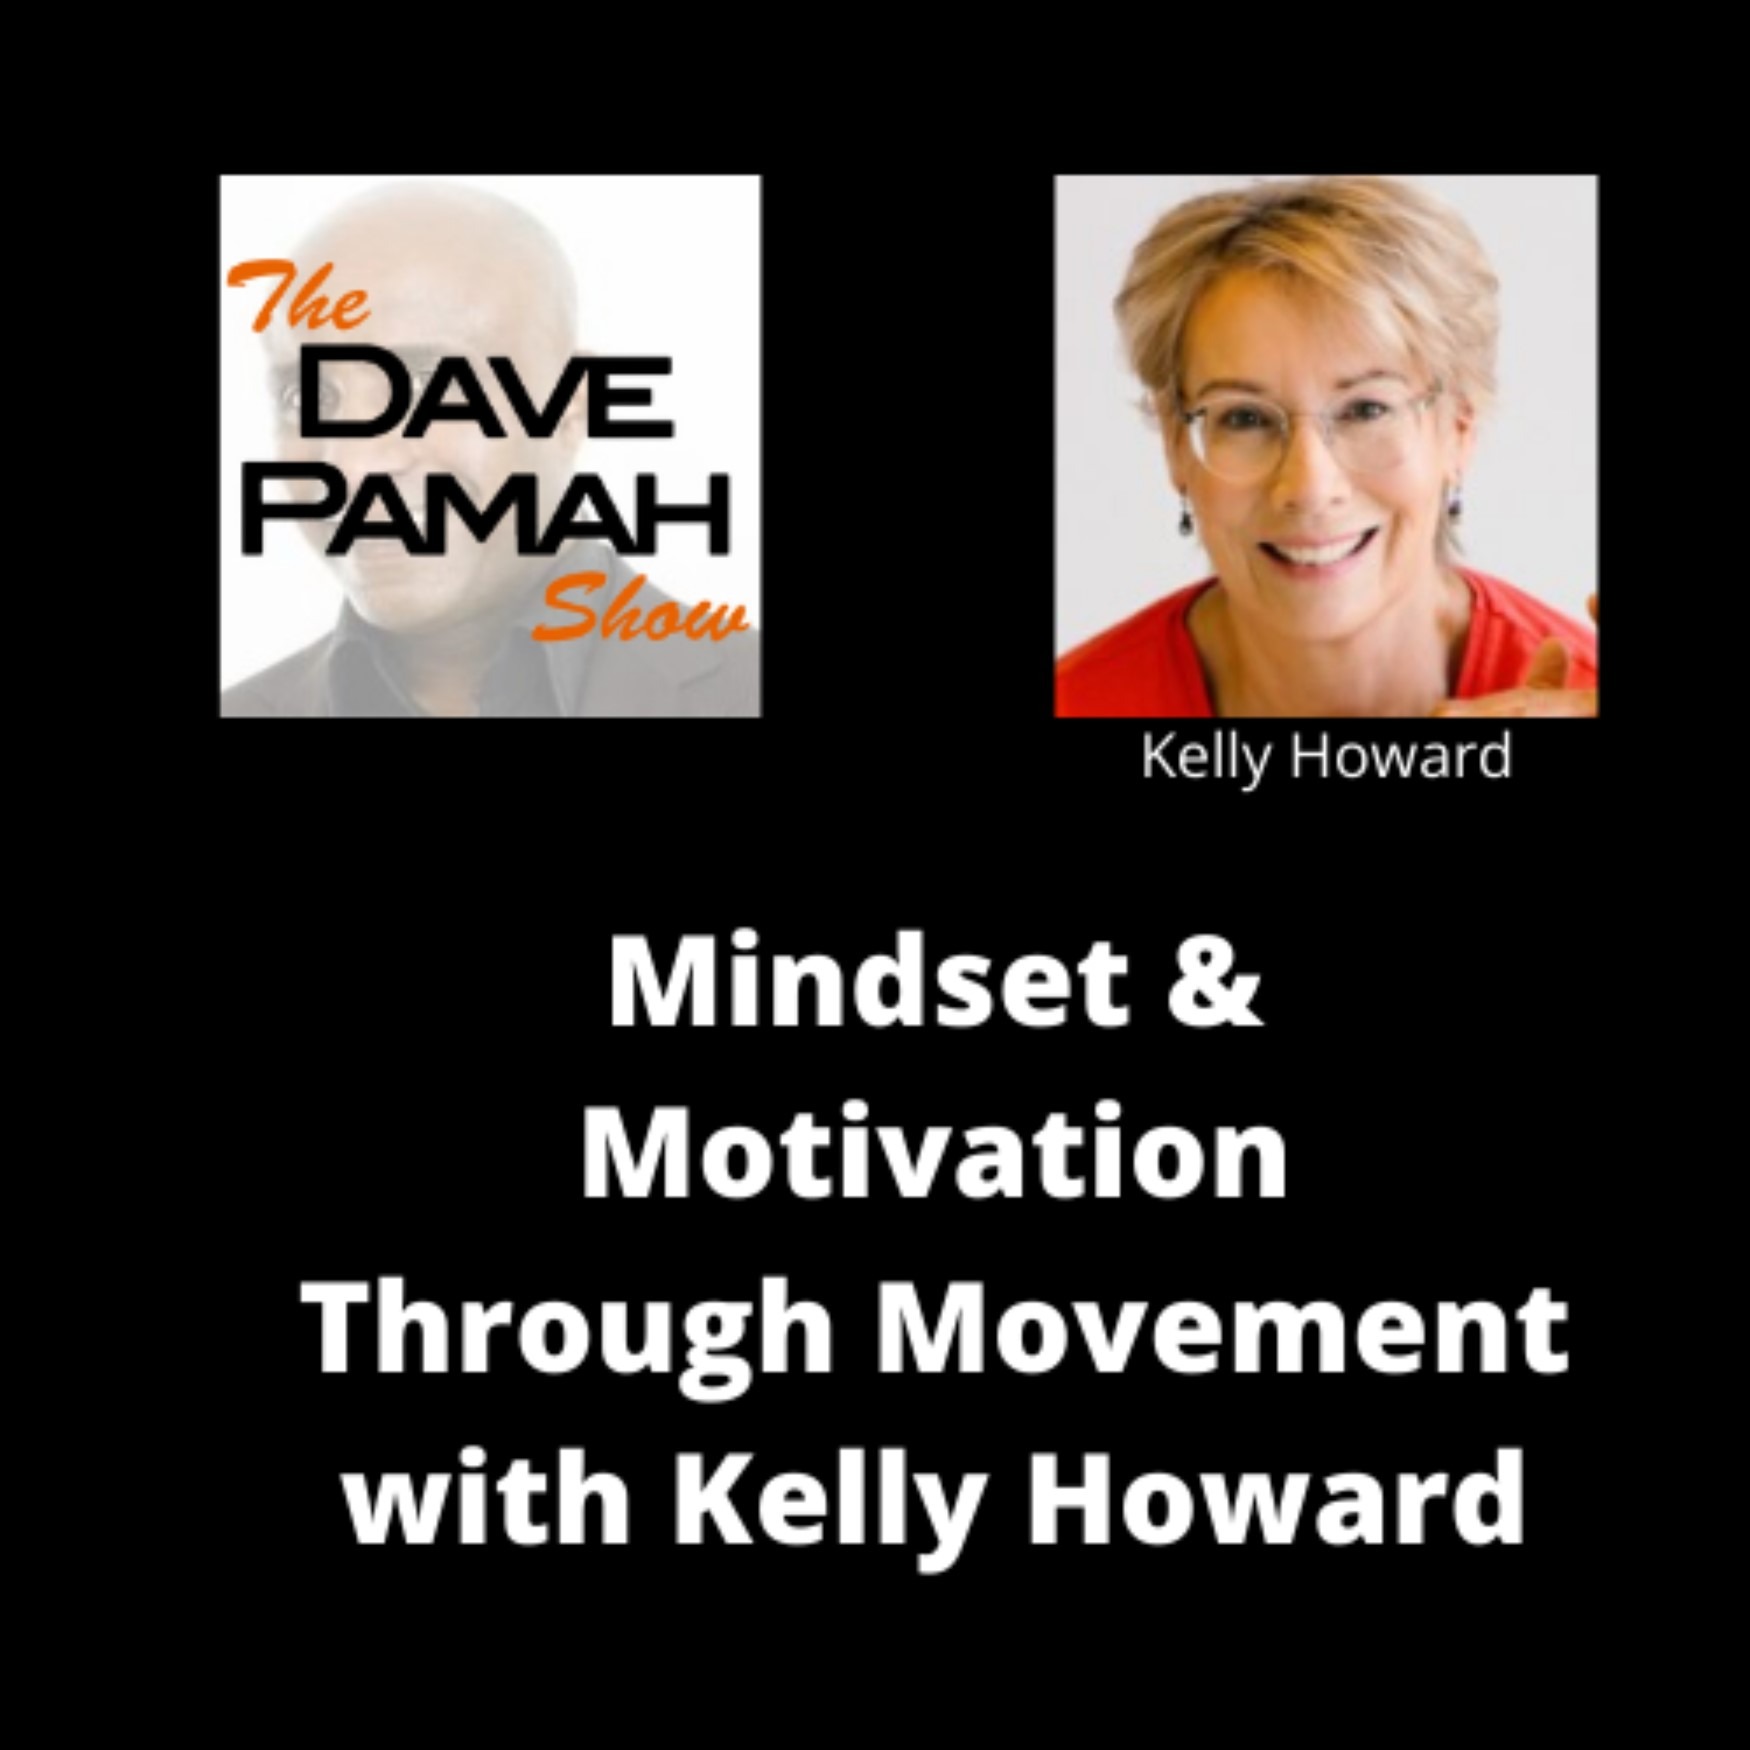 Mindset & Motivation Through Movement with Kelly Howard